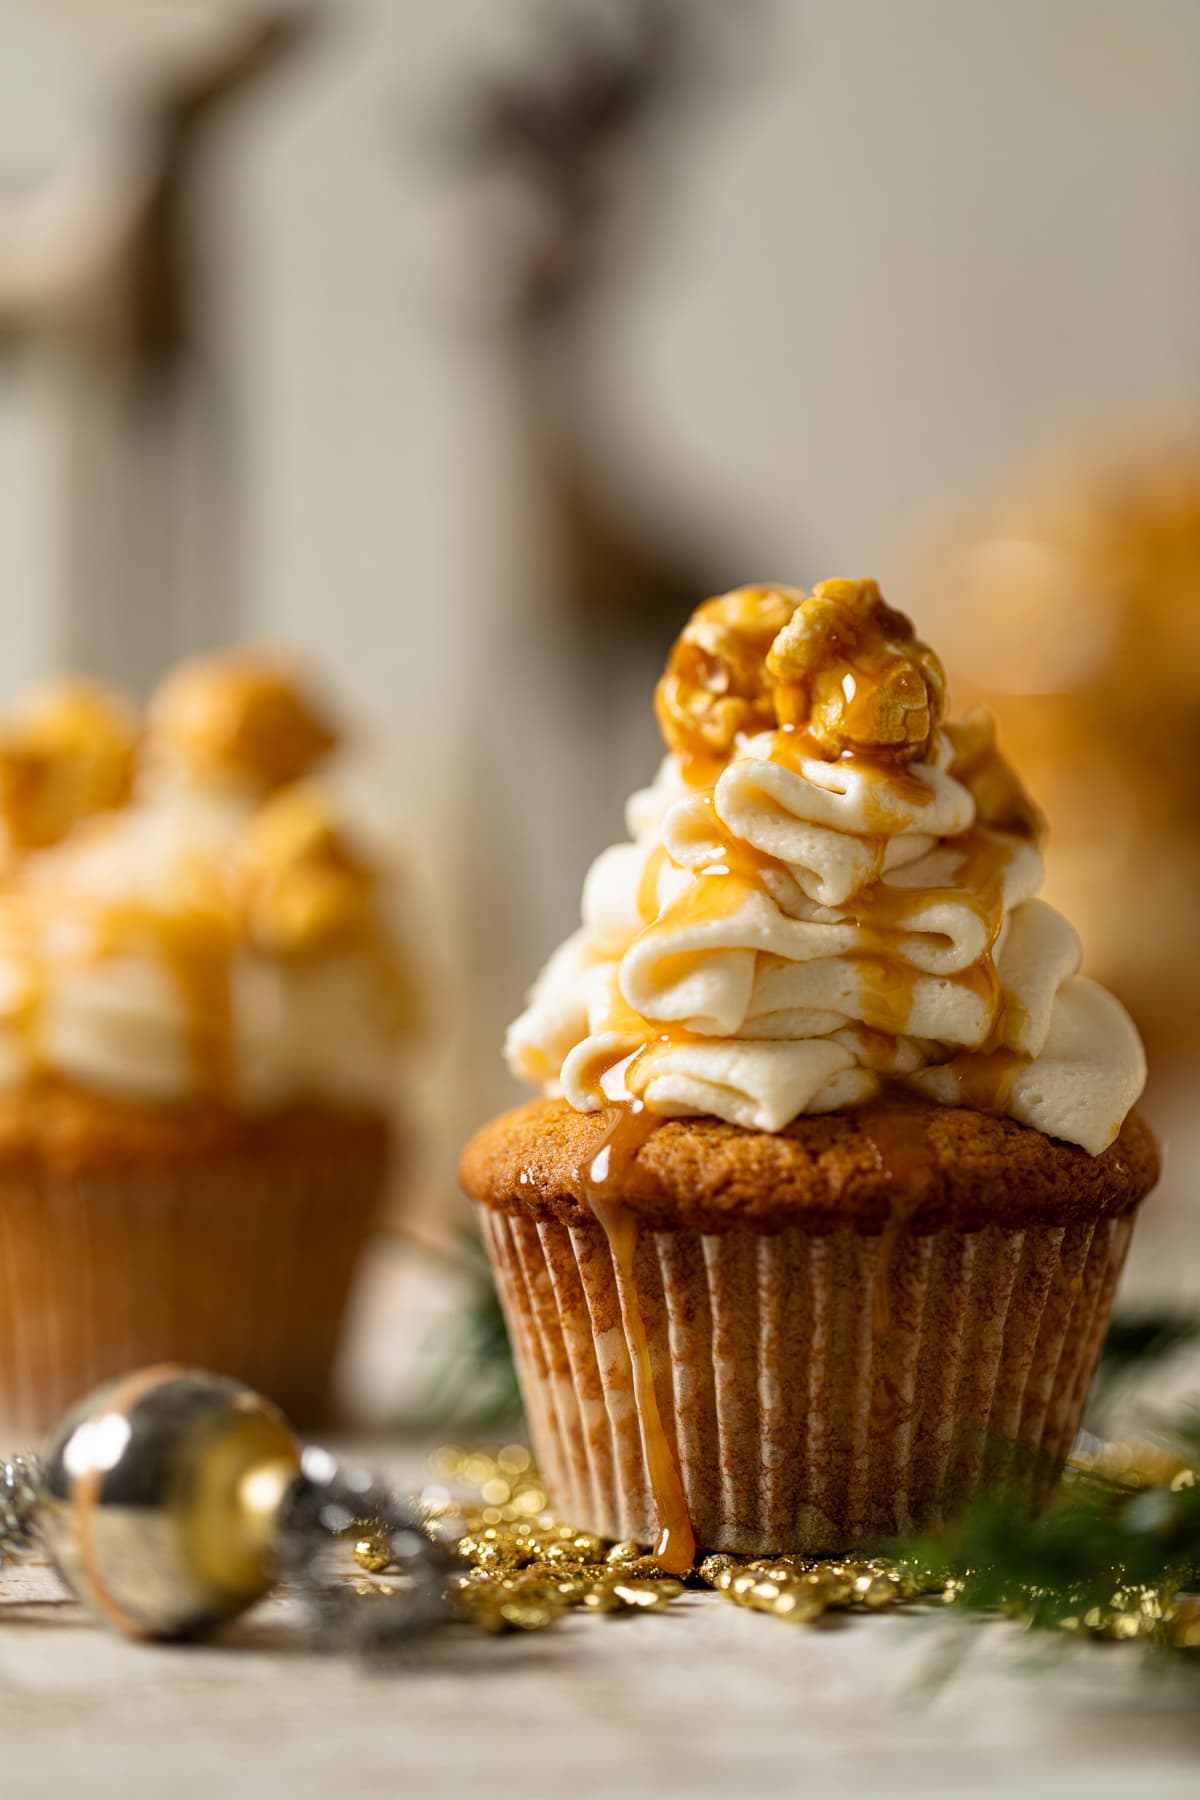 Caramel Eggnog Cupcake topped with caramel popcorn